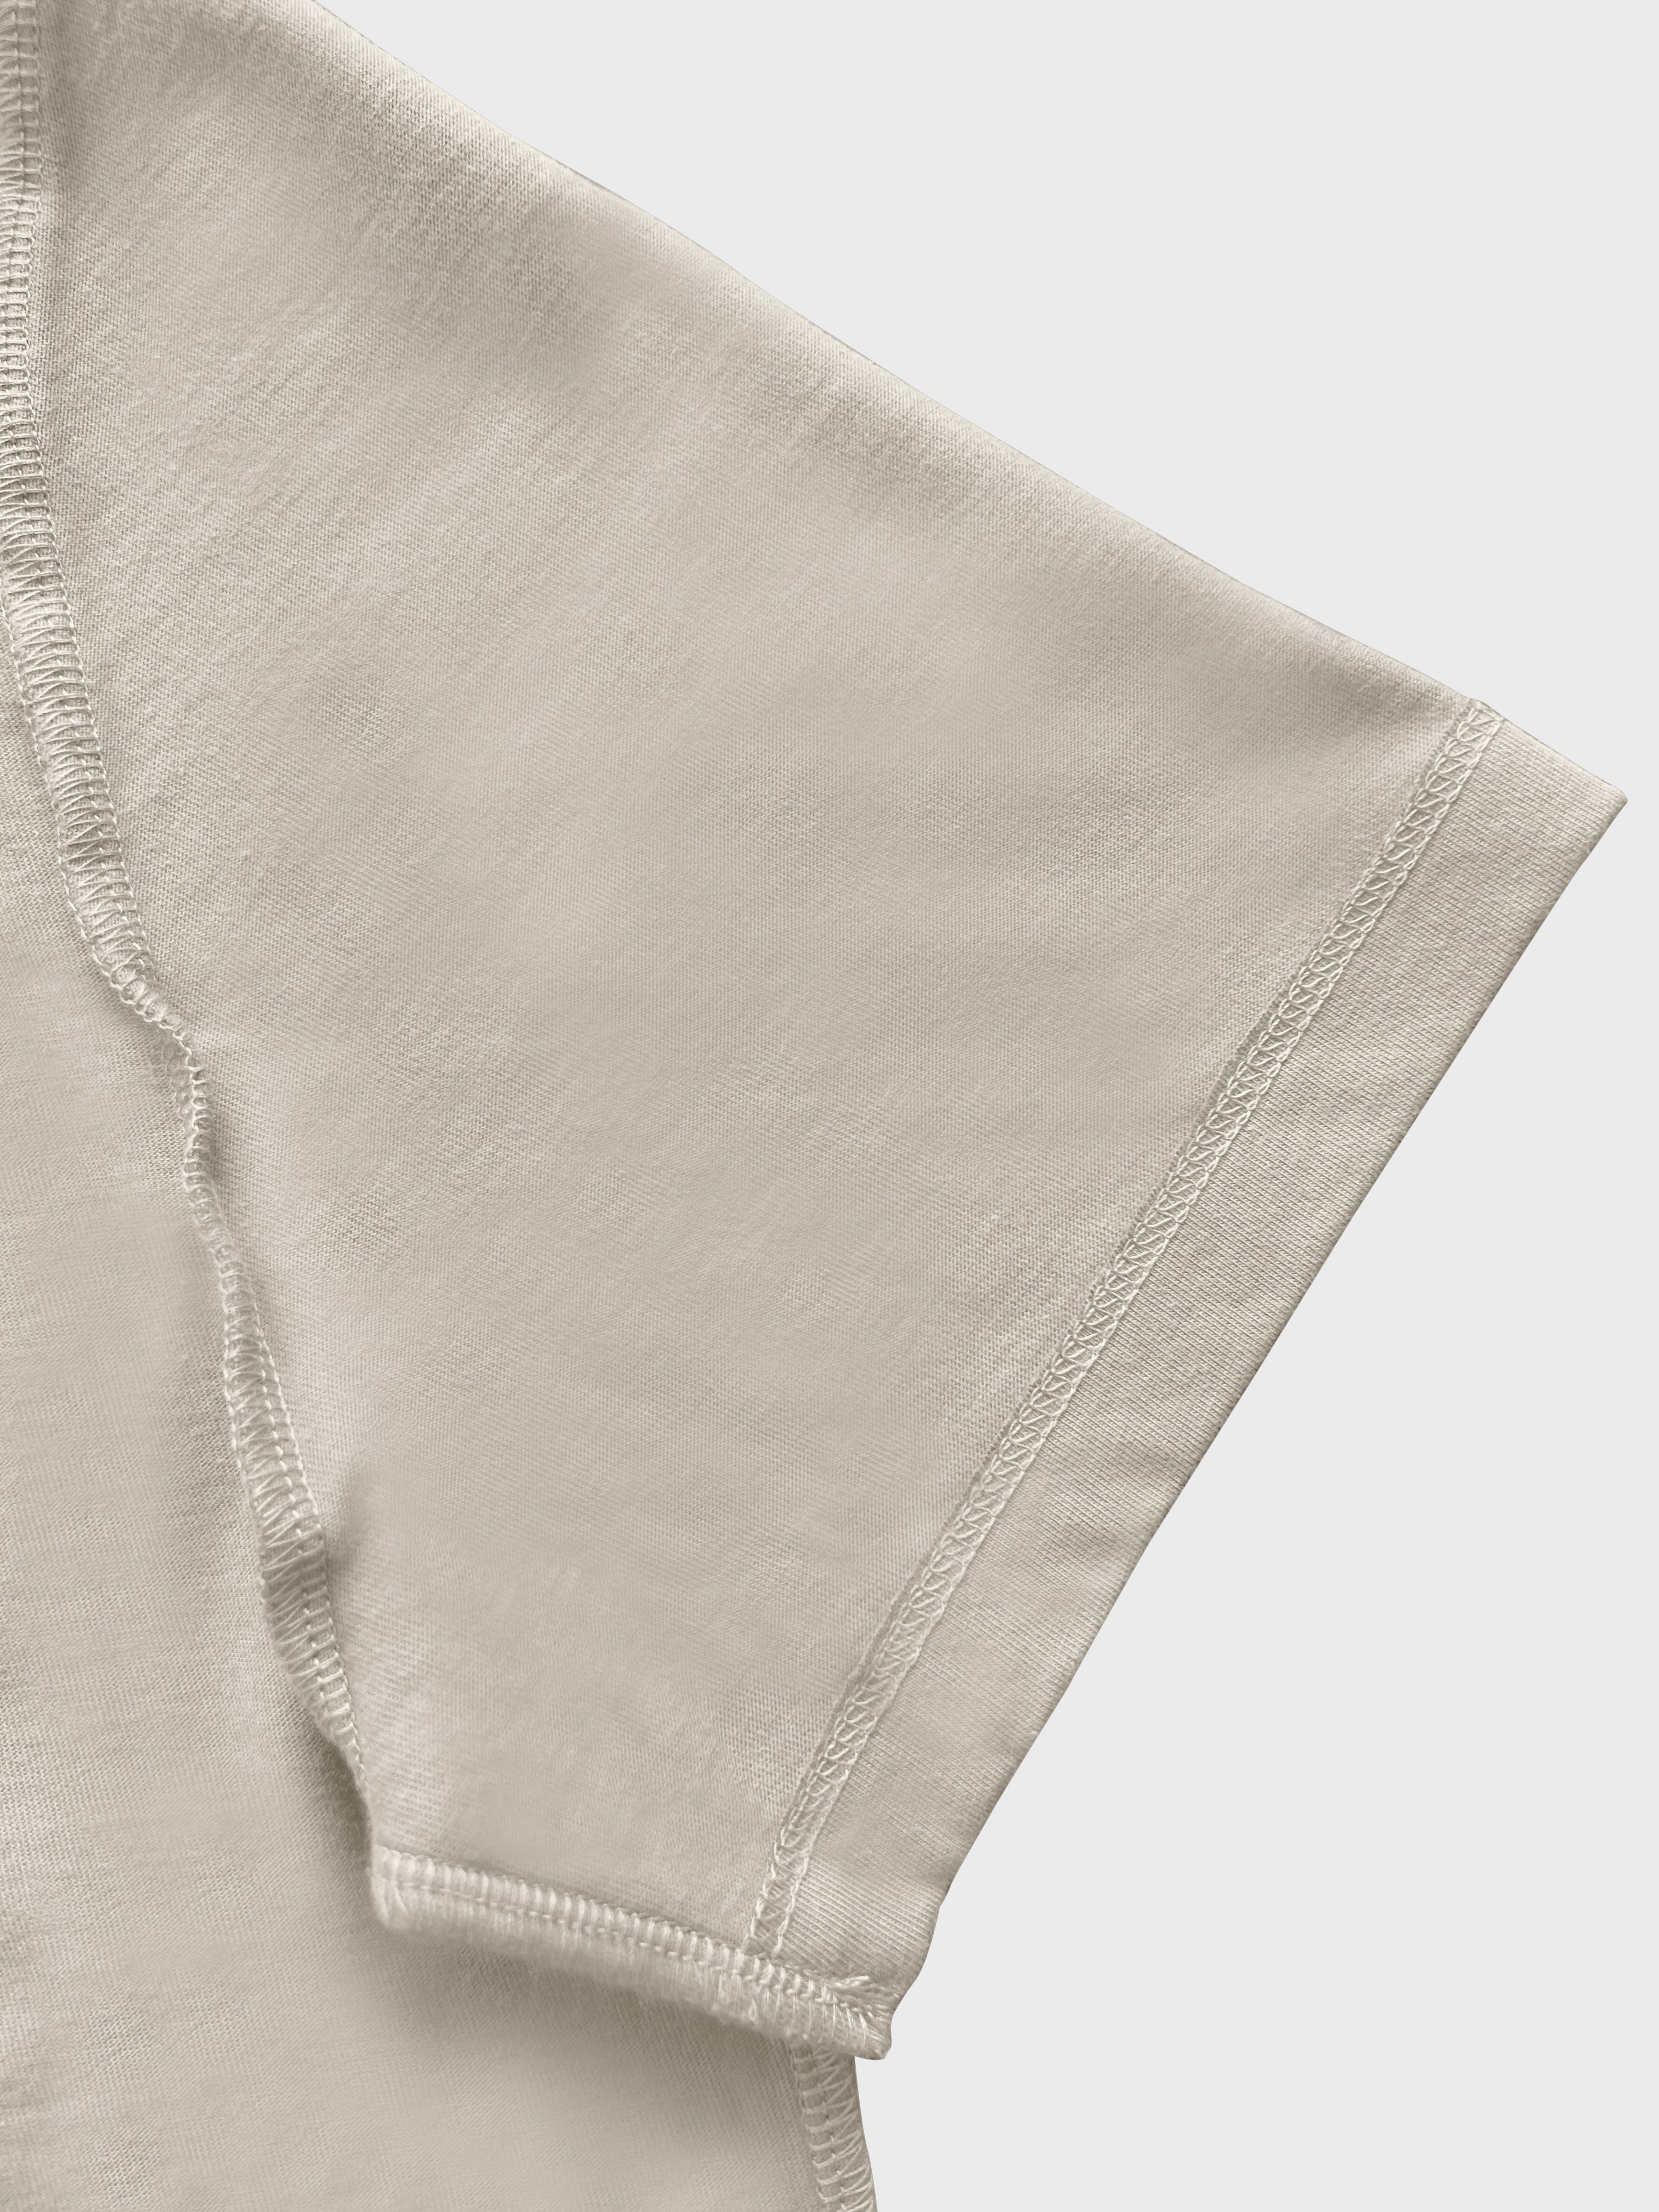 Crew Neck Sand color plain T-shirt with Short sleeve